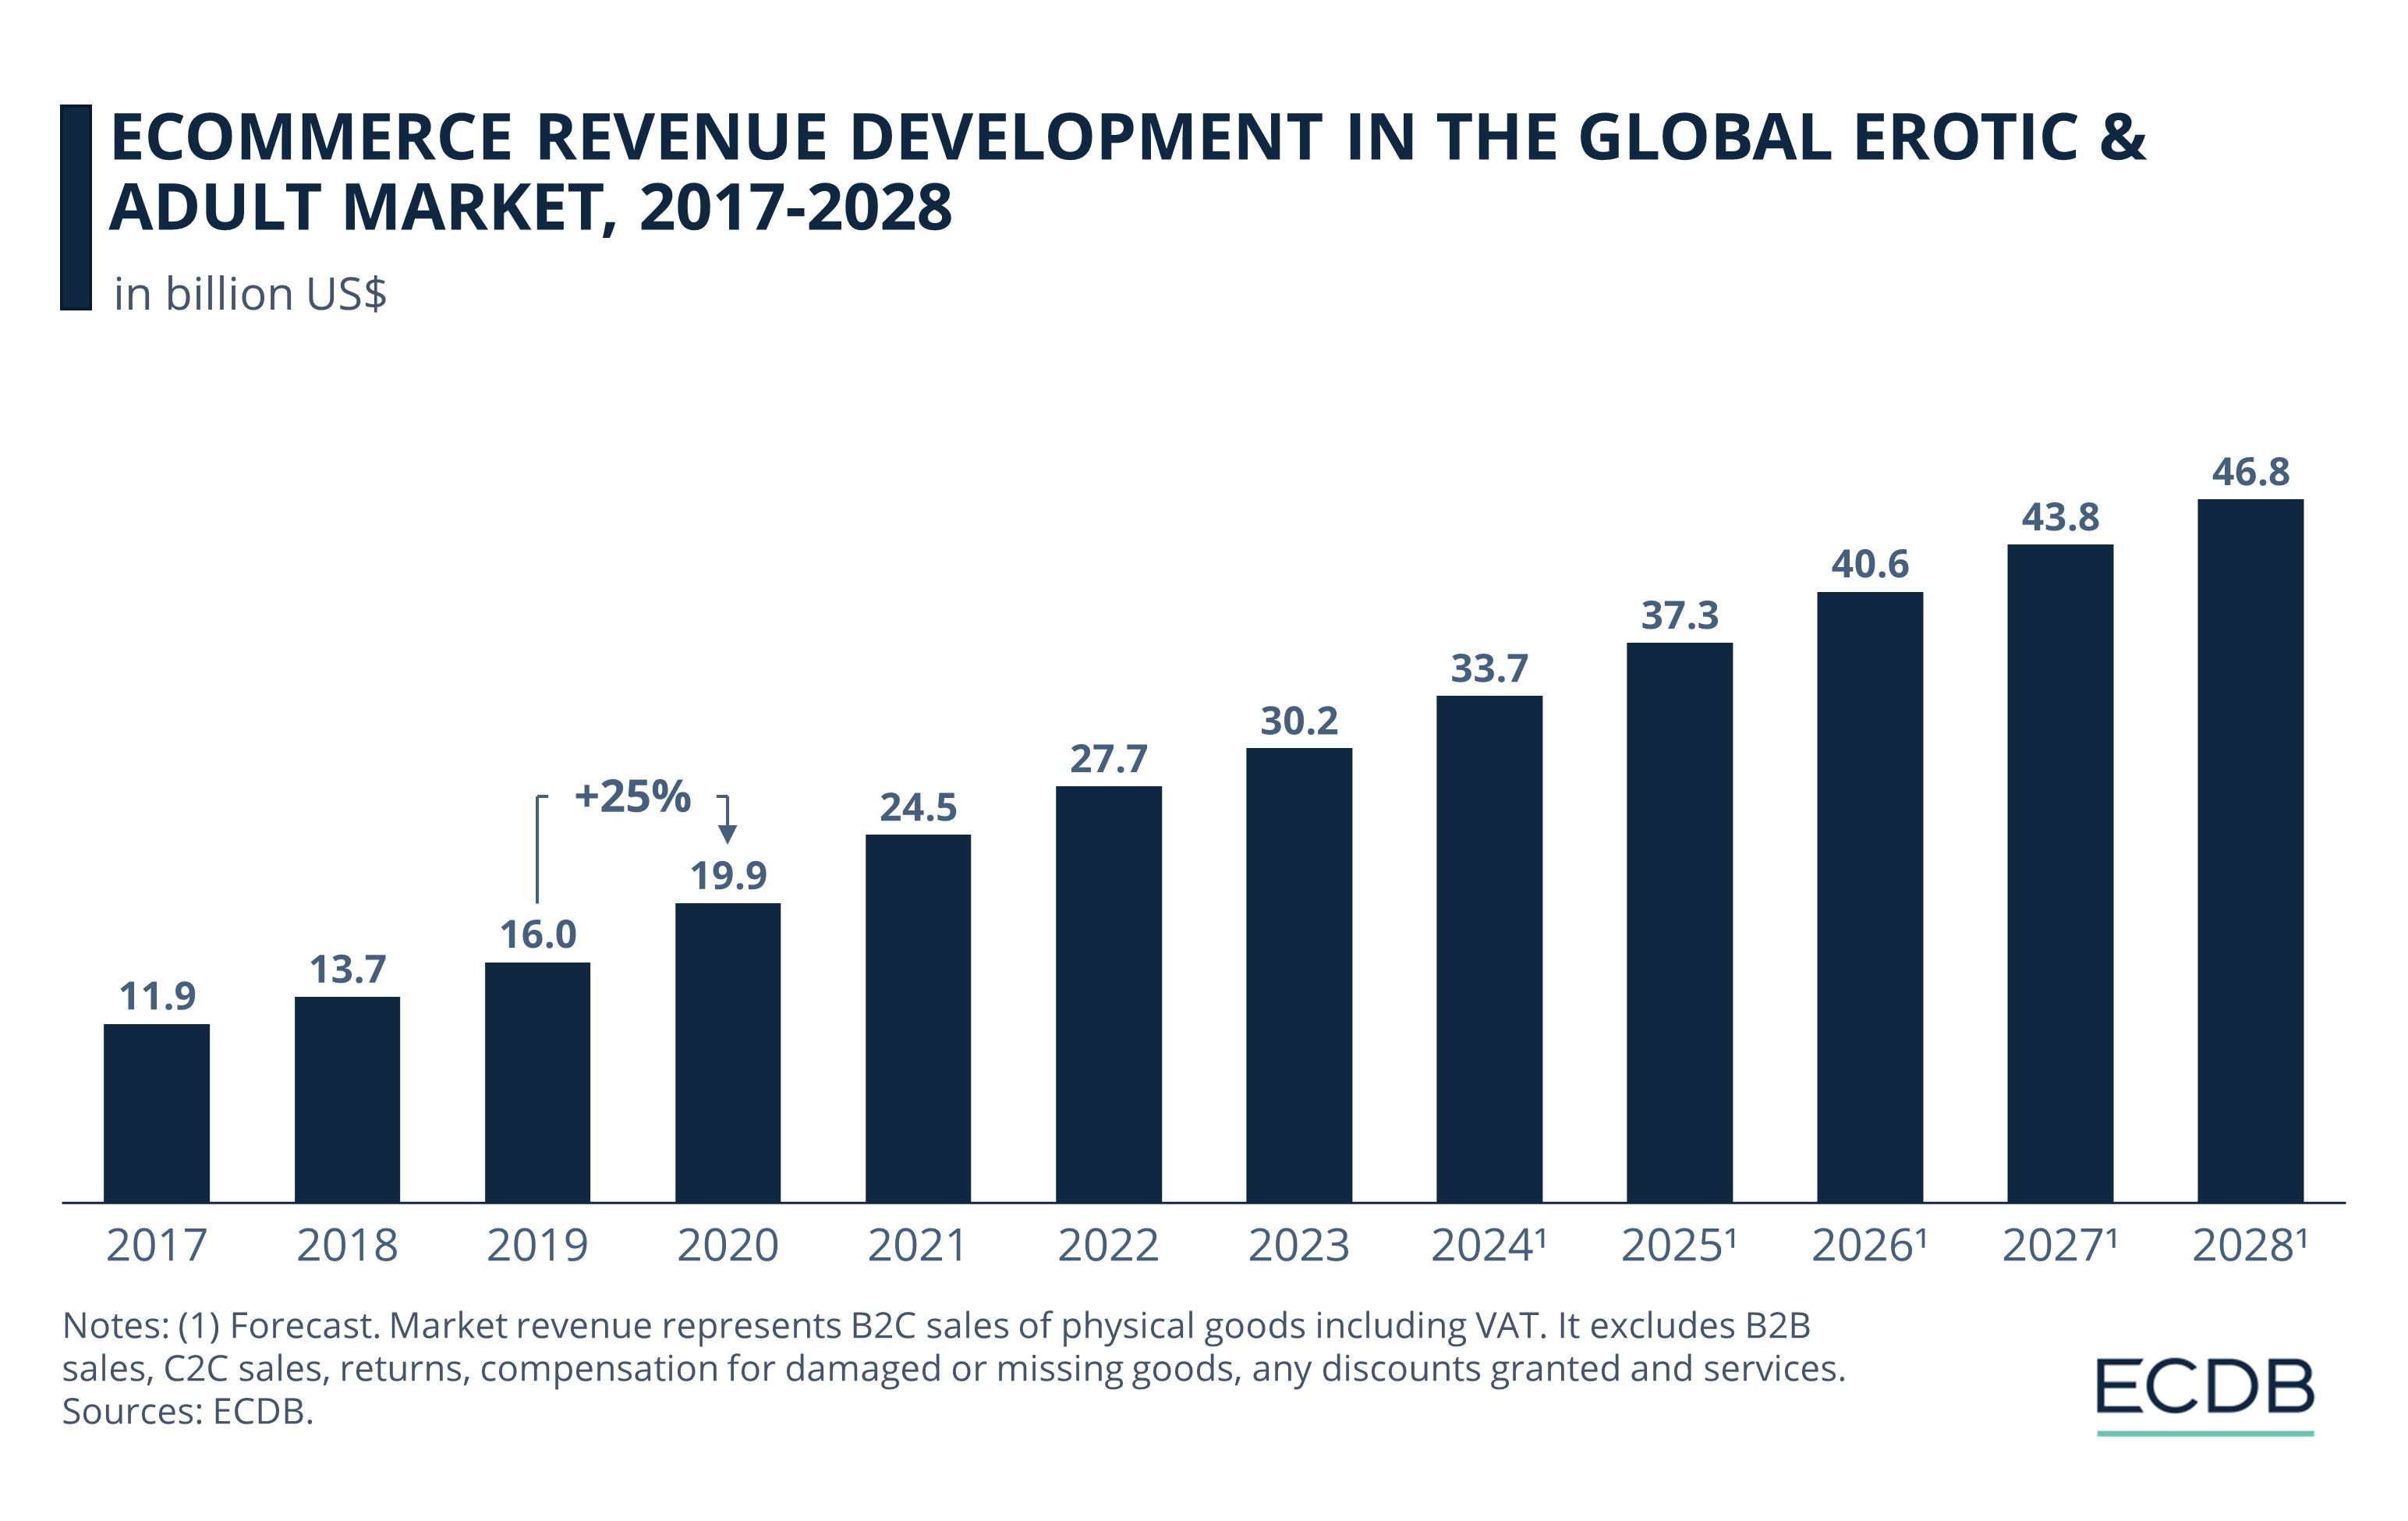 eCommerce Revenue Development in the Global Erotic & Adult Market, 2017-2028